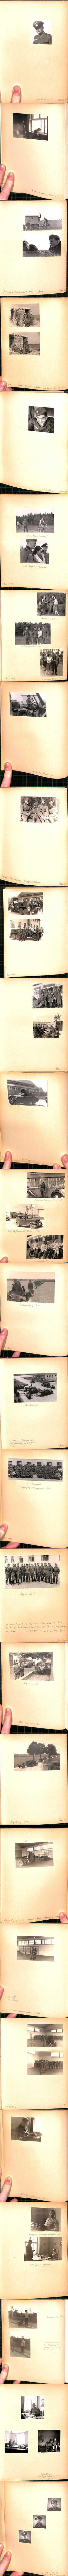 (a68593) álbum de fotos 2. Guerra Mundial año 1940, 44 fotos, entre otras búnkeres, vehículos - Imagen 1 de 1